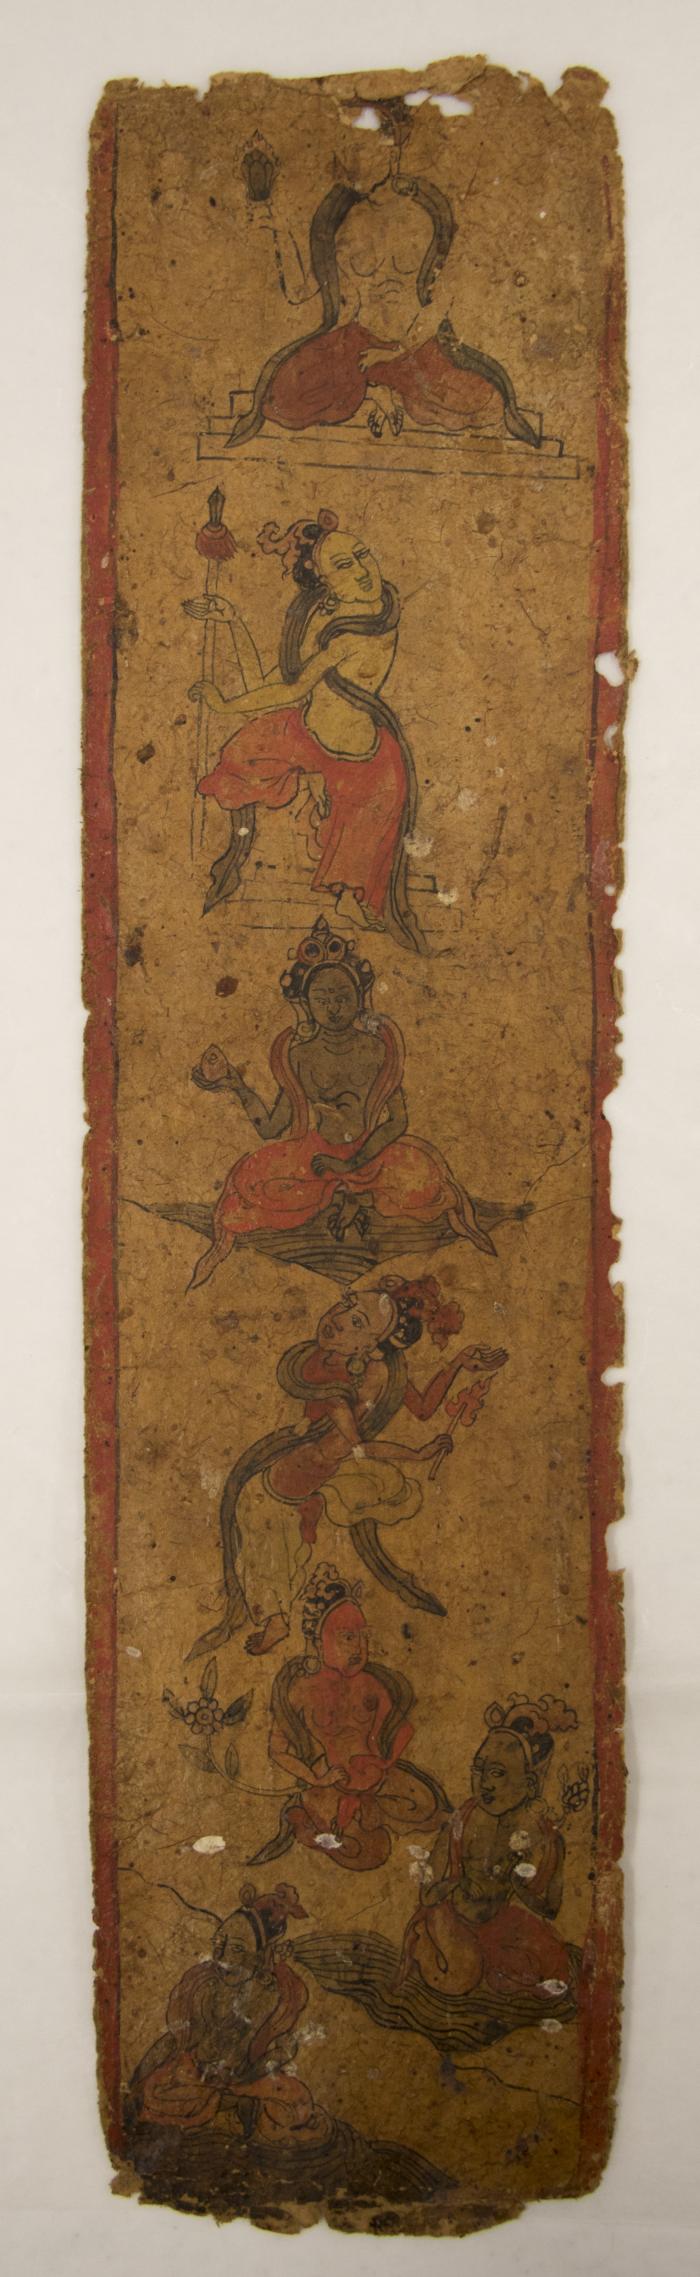 Padmasambhava and Deities in Yogic Positions